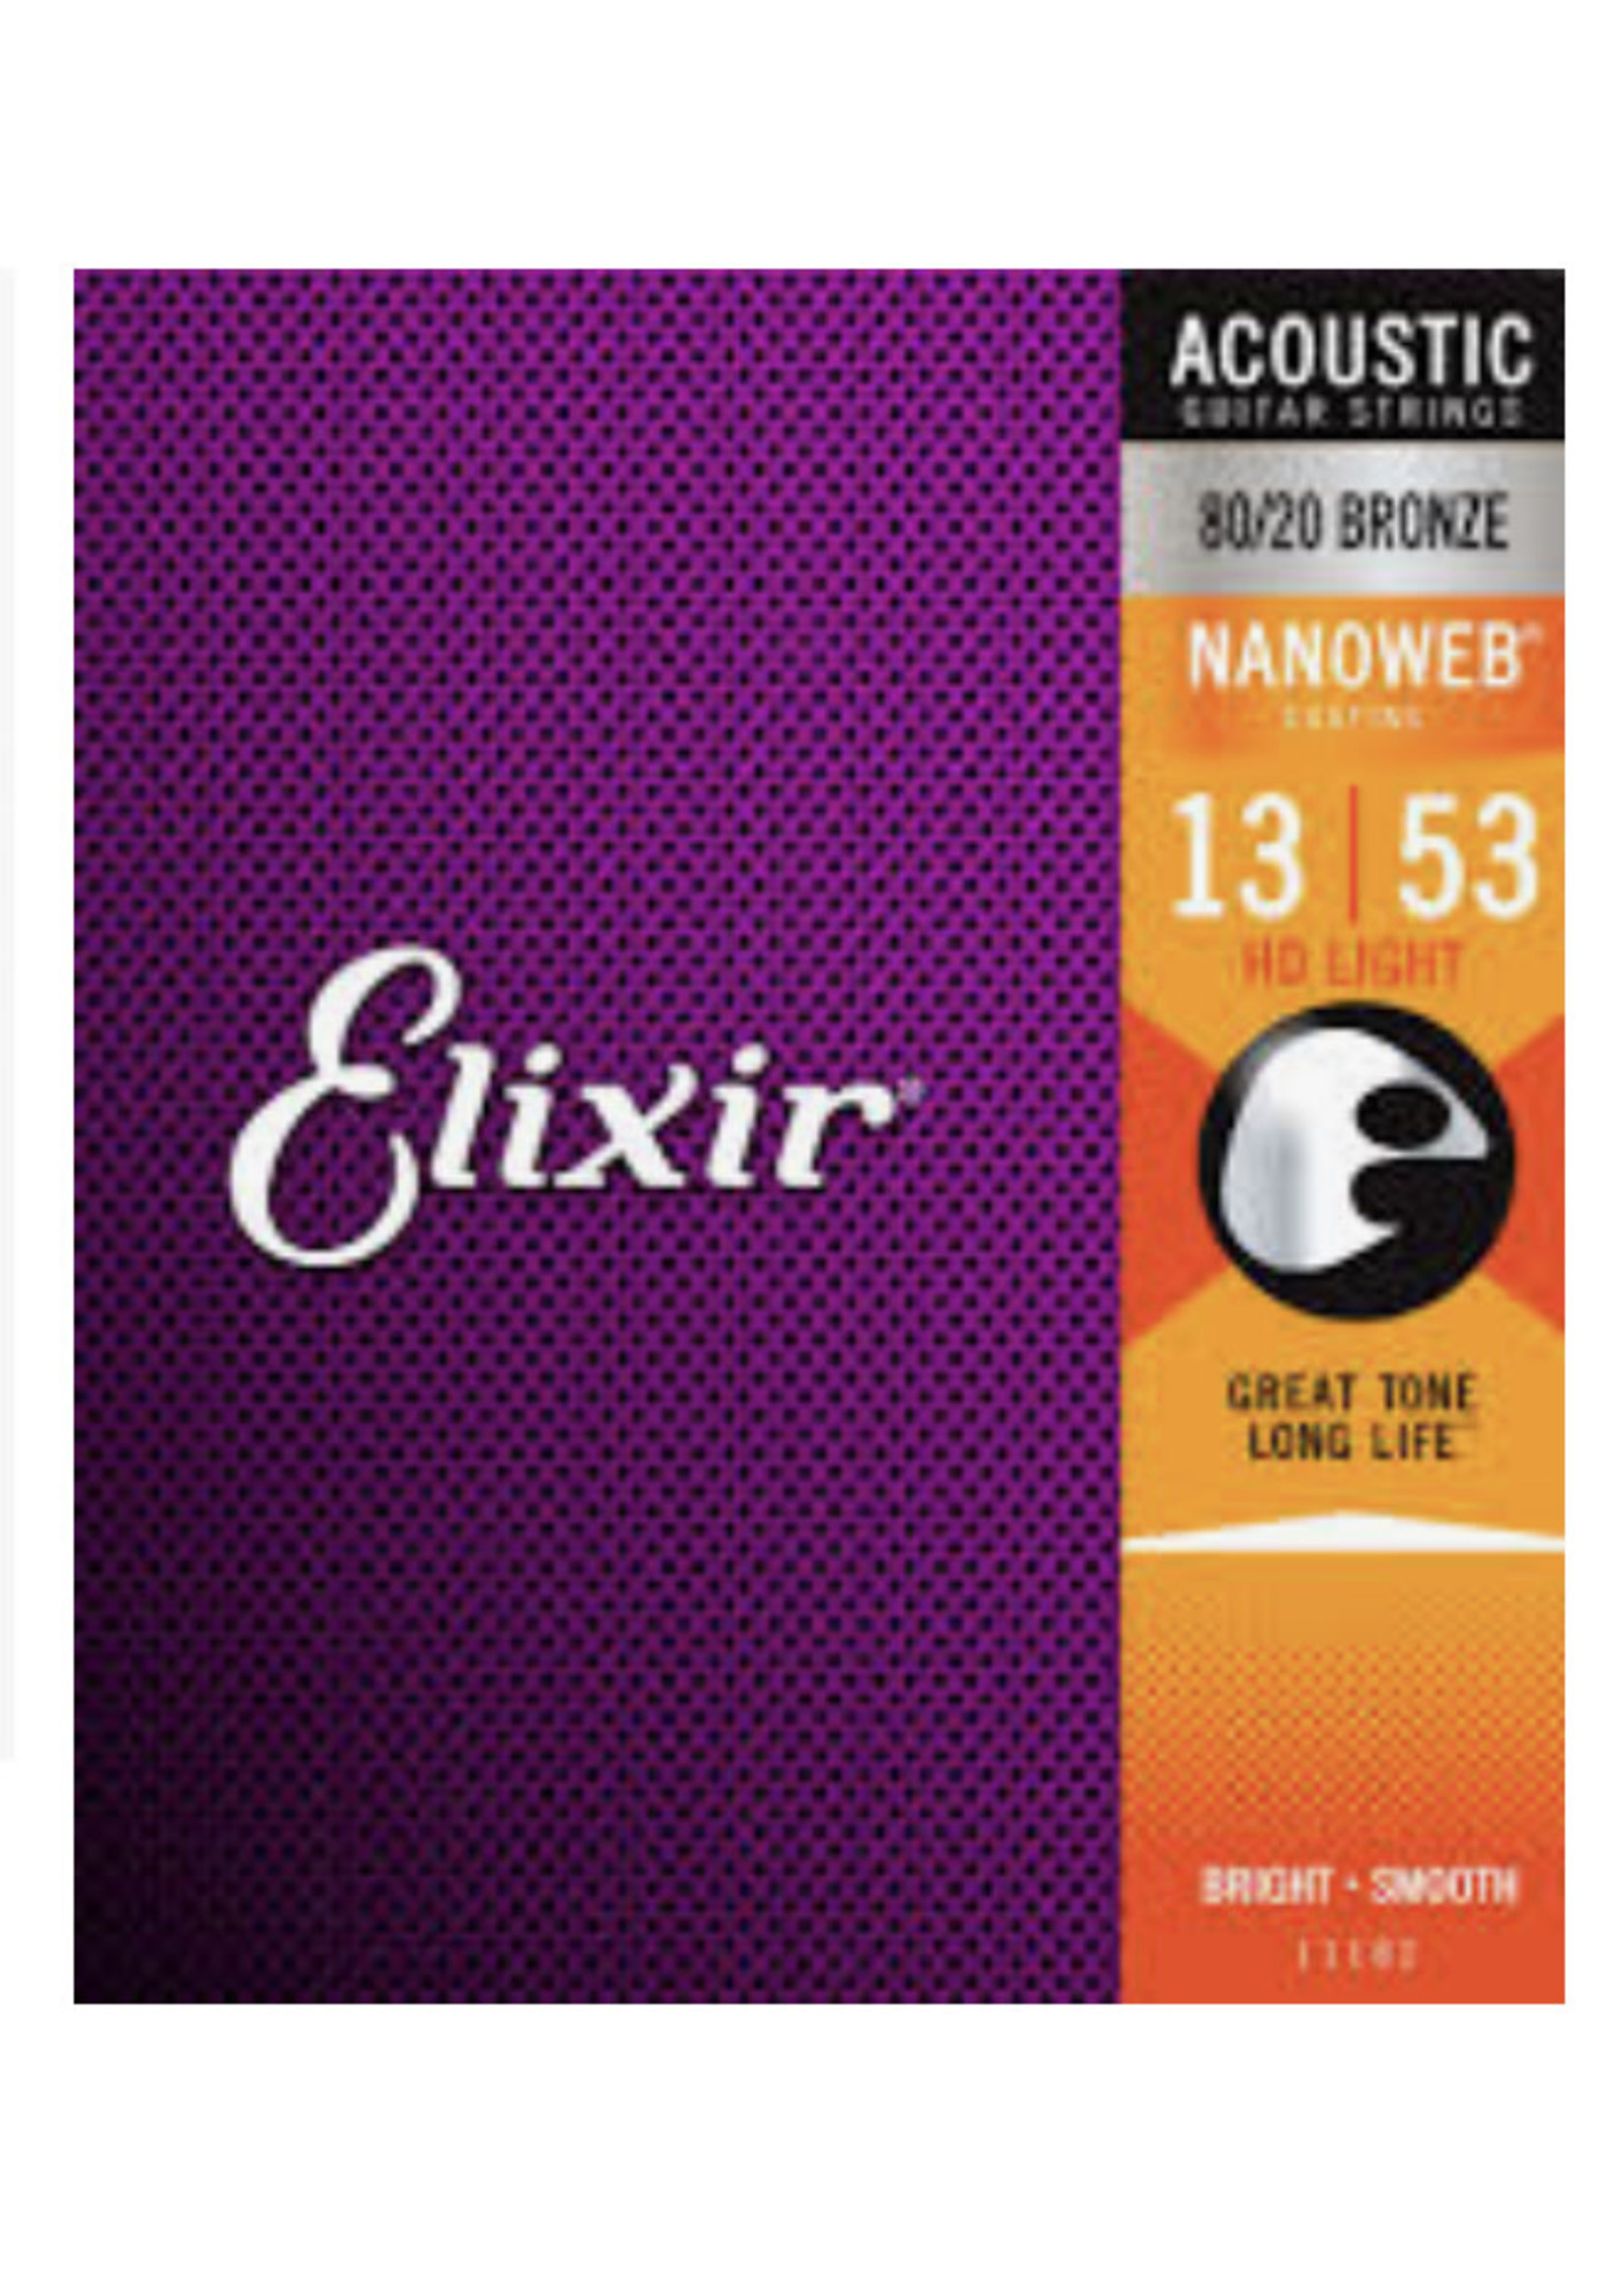 Elixir Elixir Nanoweb 80/20 Bronze 13/53- HD Light Acoustic Guitar Strings